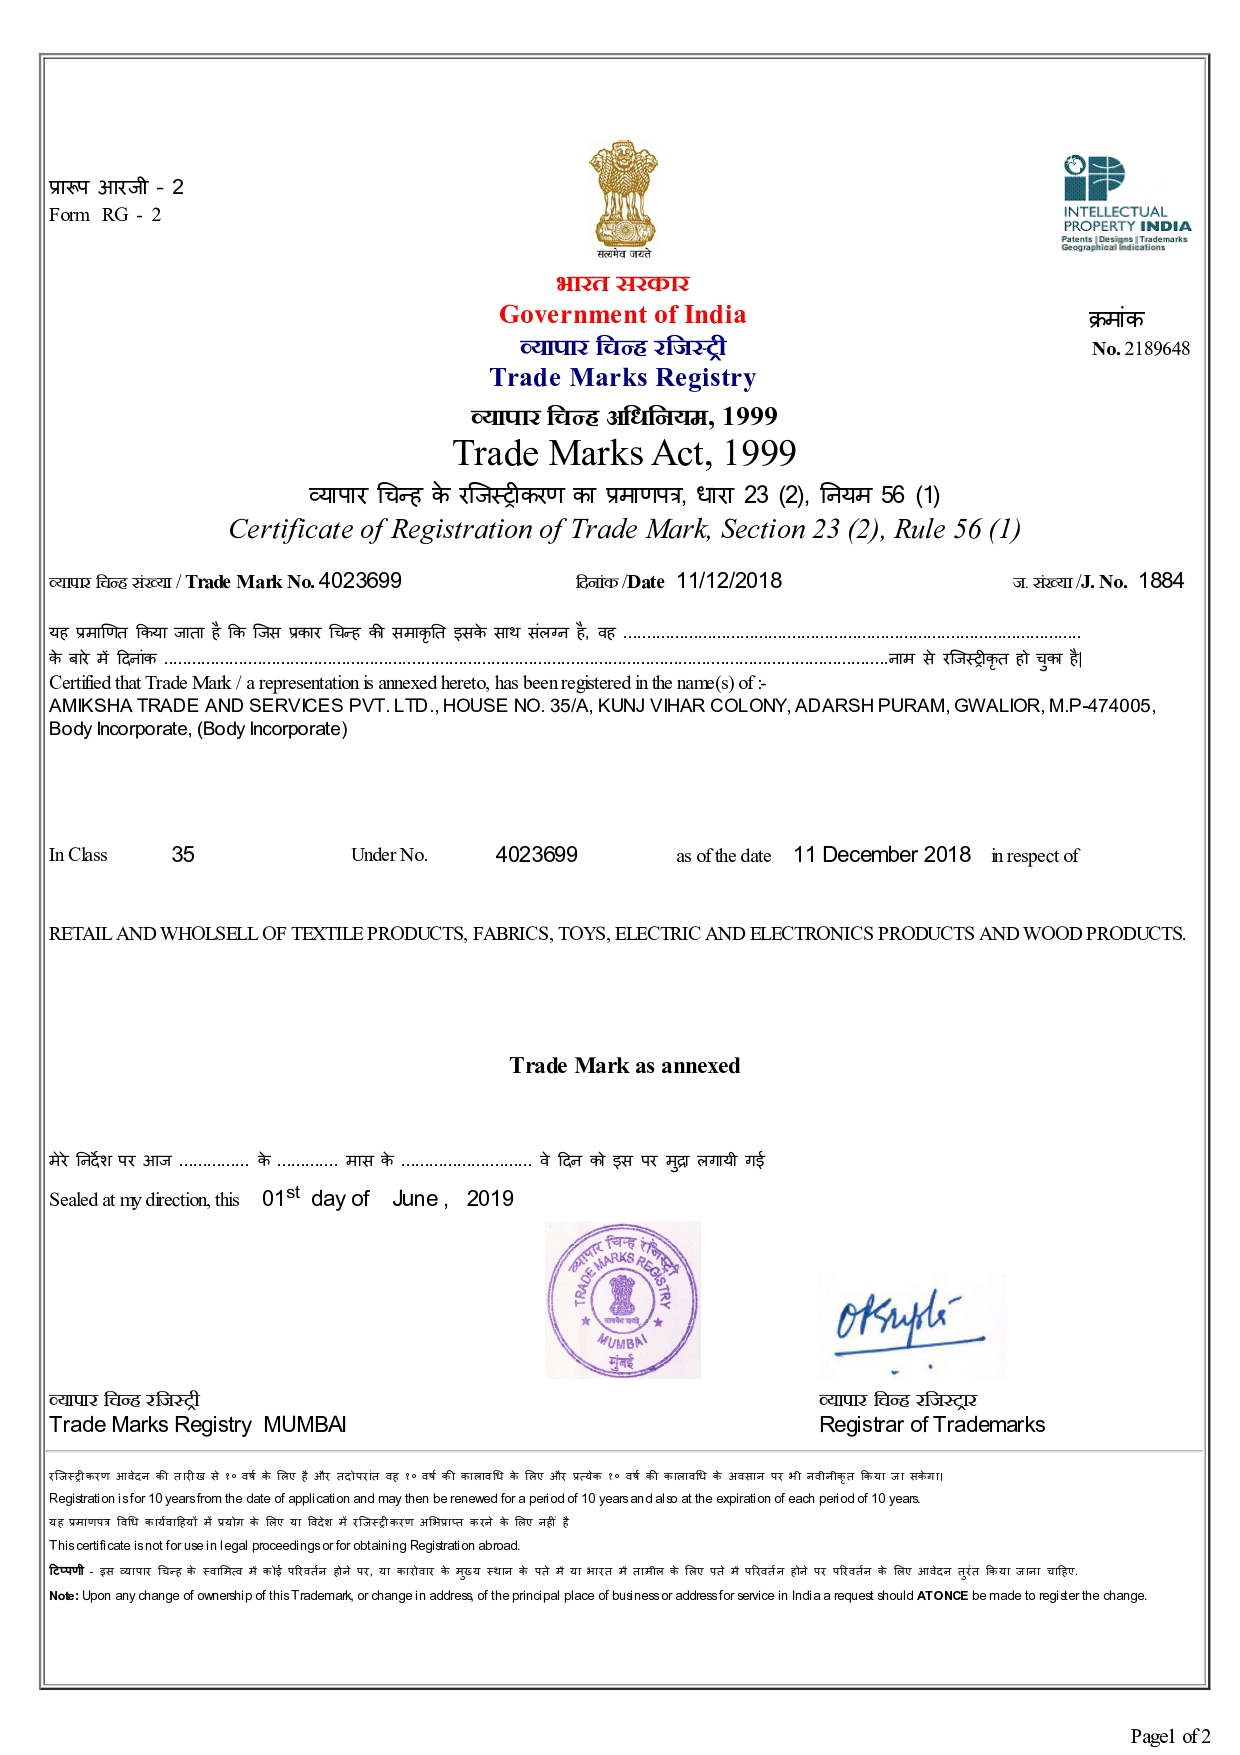 Trademark Registration Certificate 01